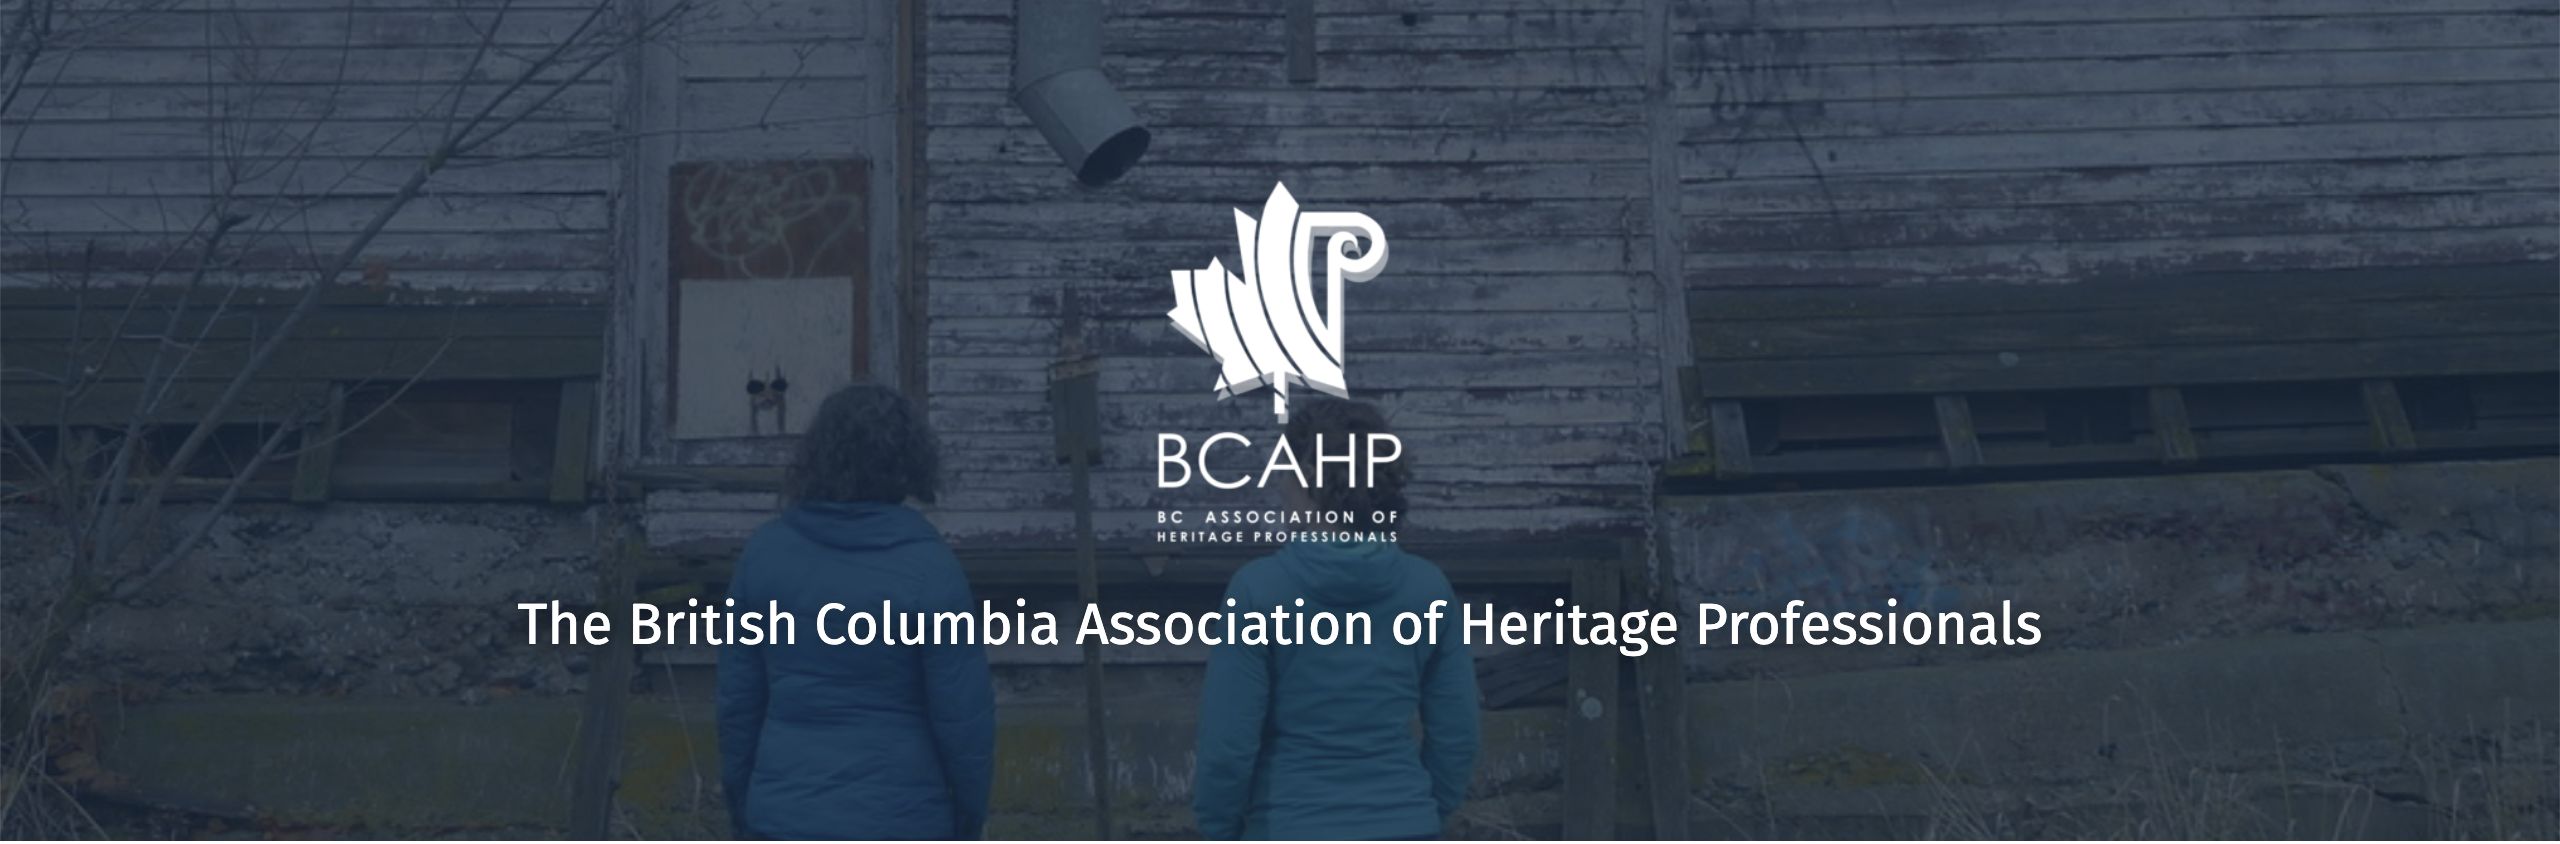 BC Association of Heritage Professionals Sponsorship Banner